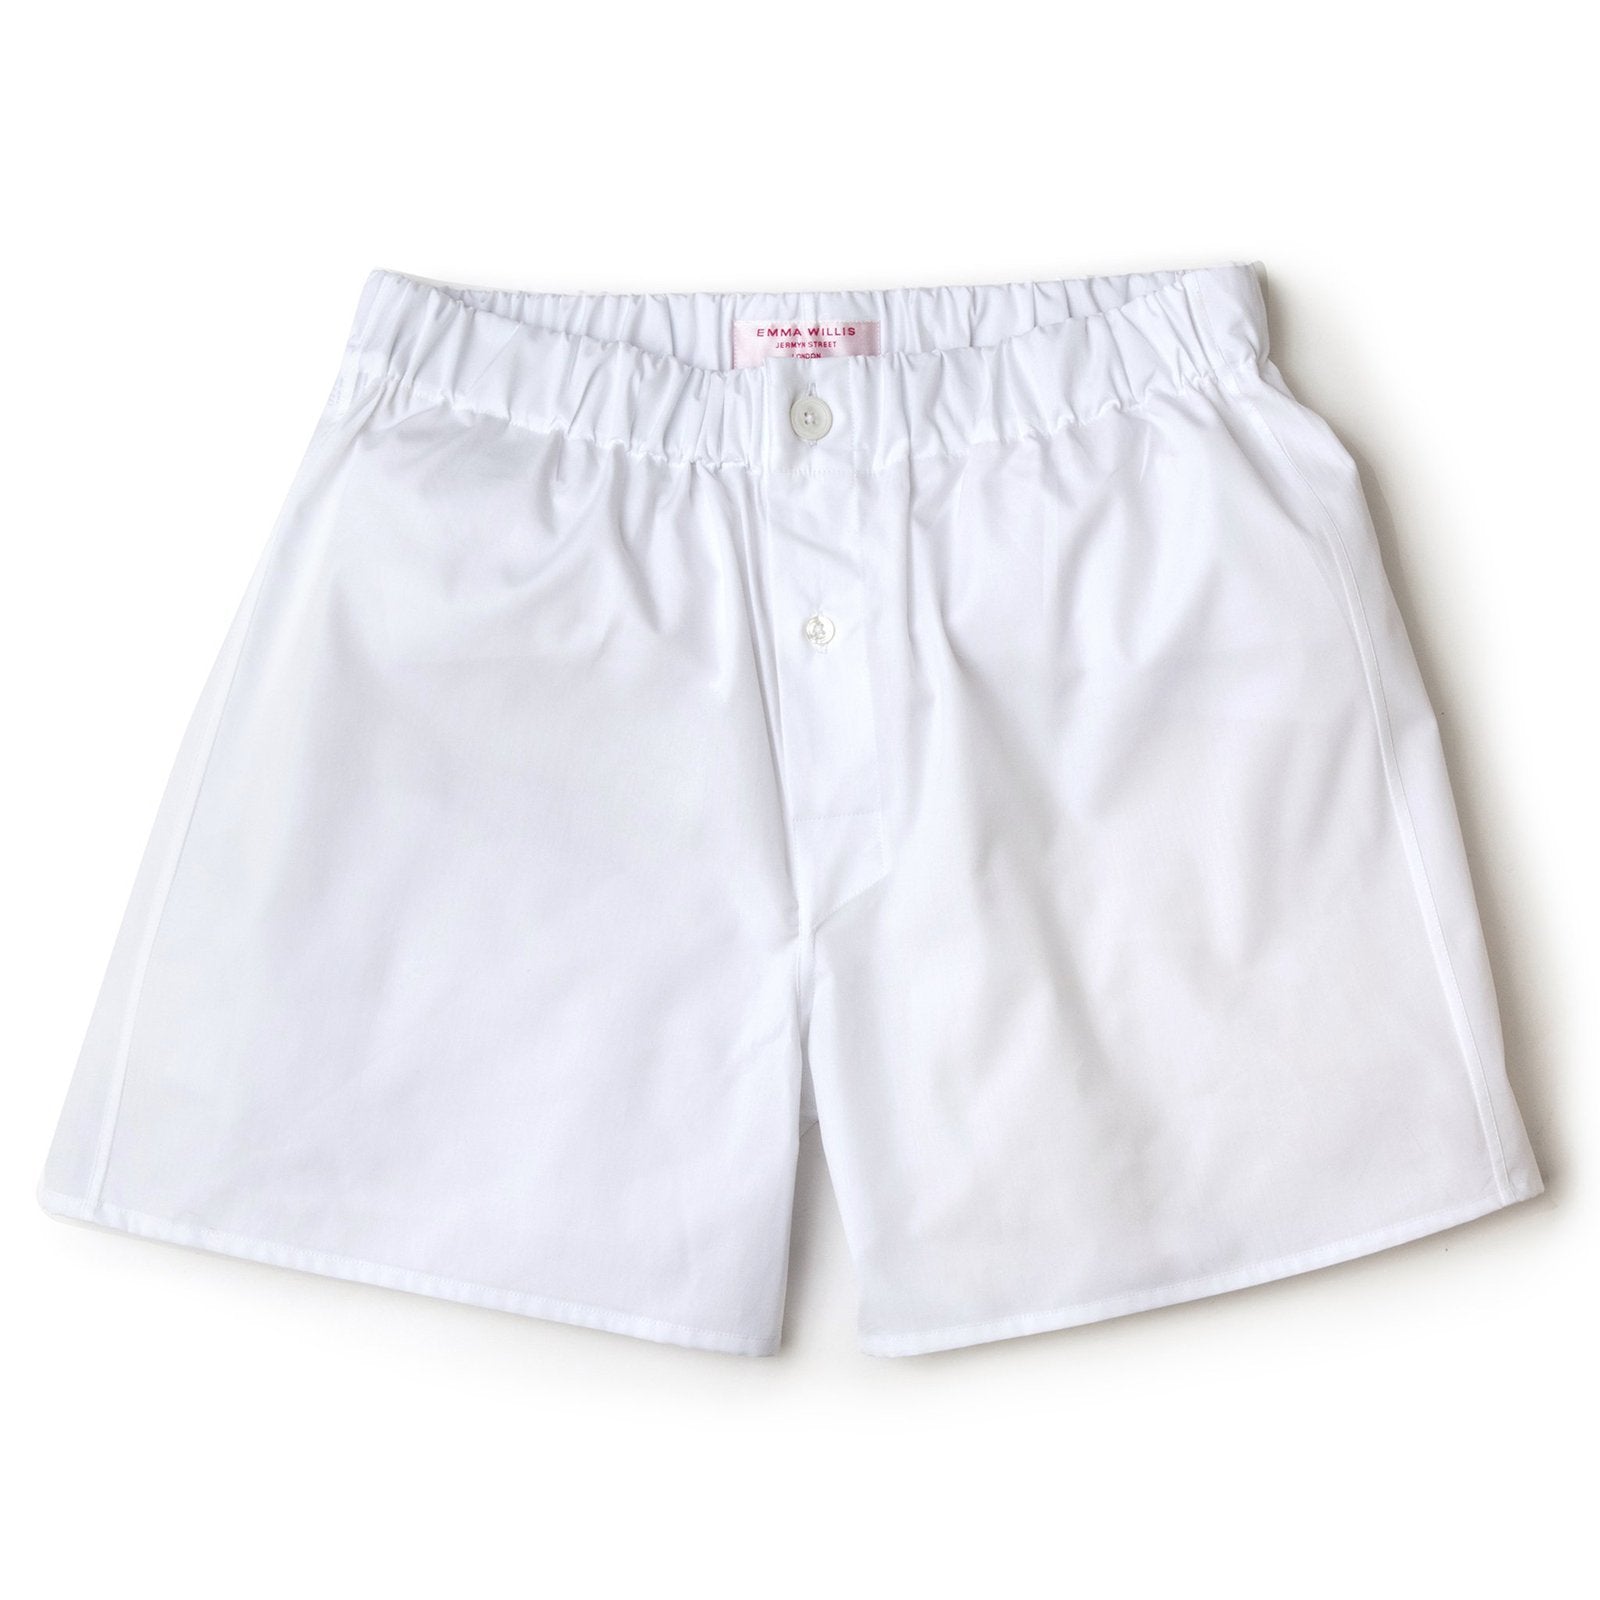 White Soyella Cotton Boxer Shorts - Slim Fit freeshipping - Emma Willis